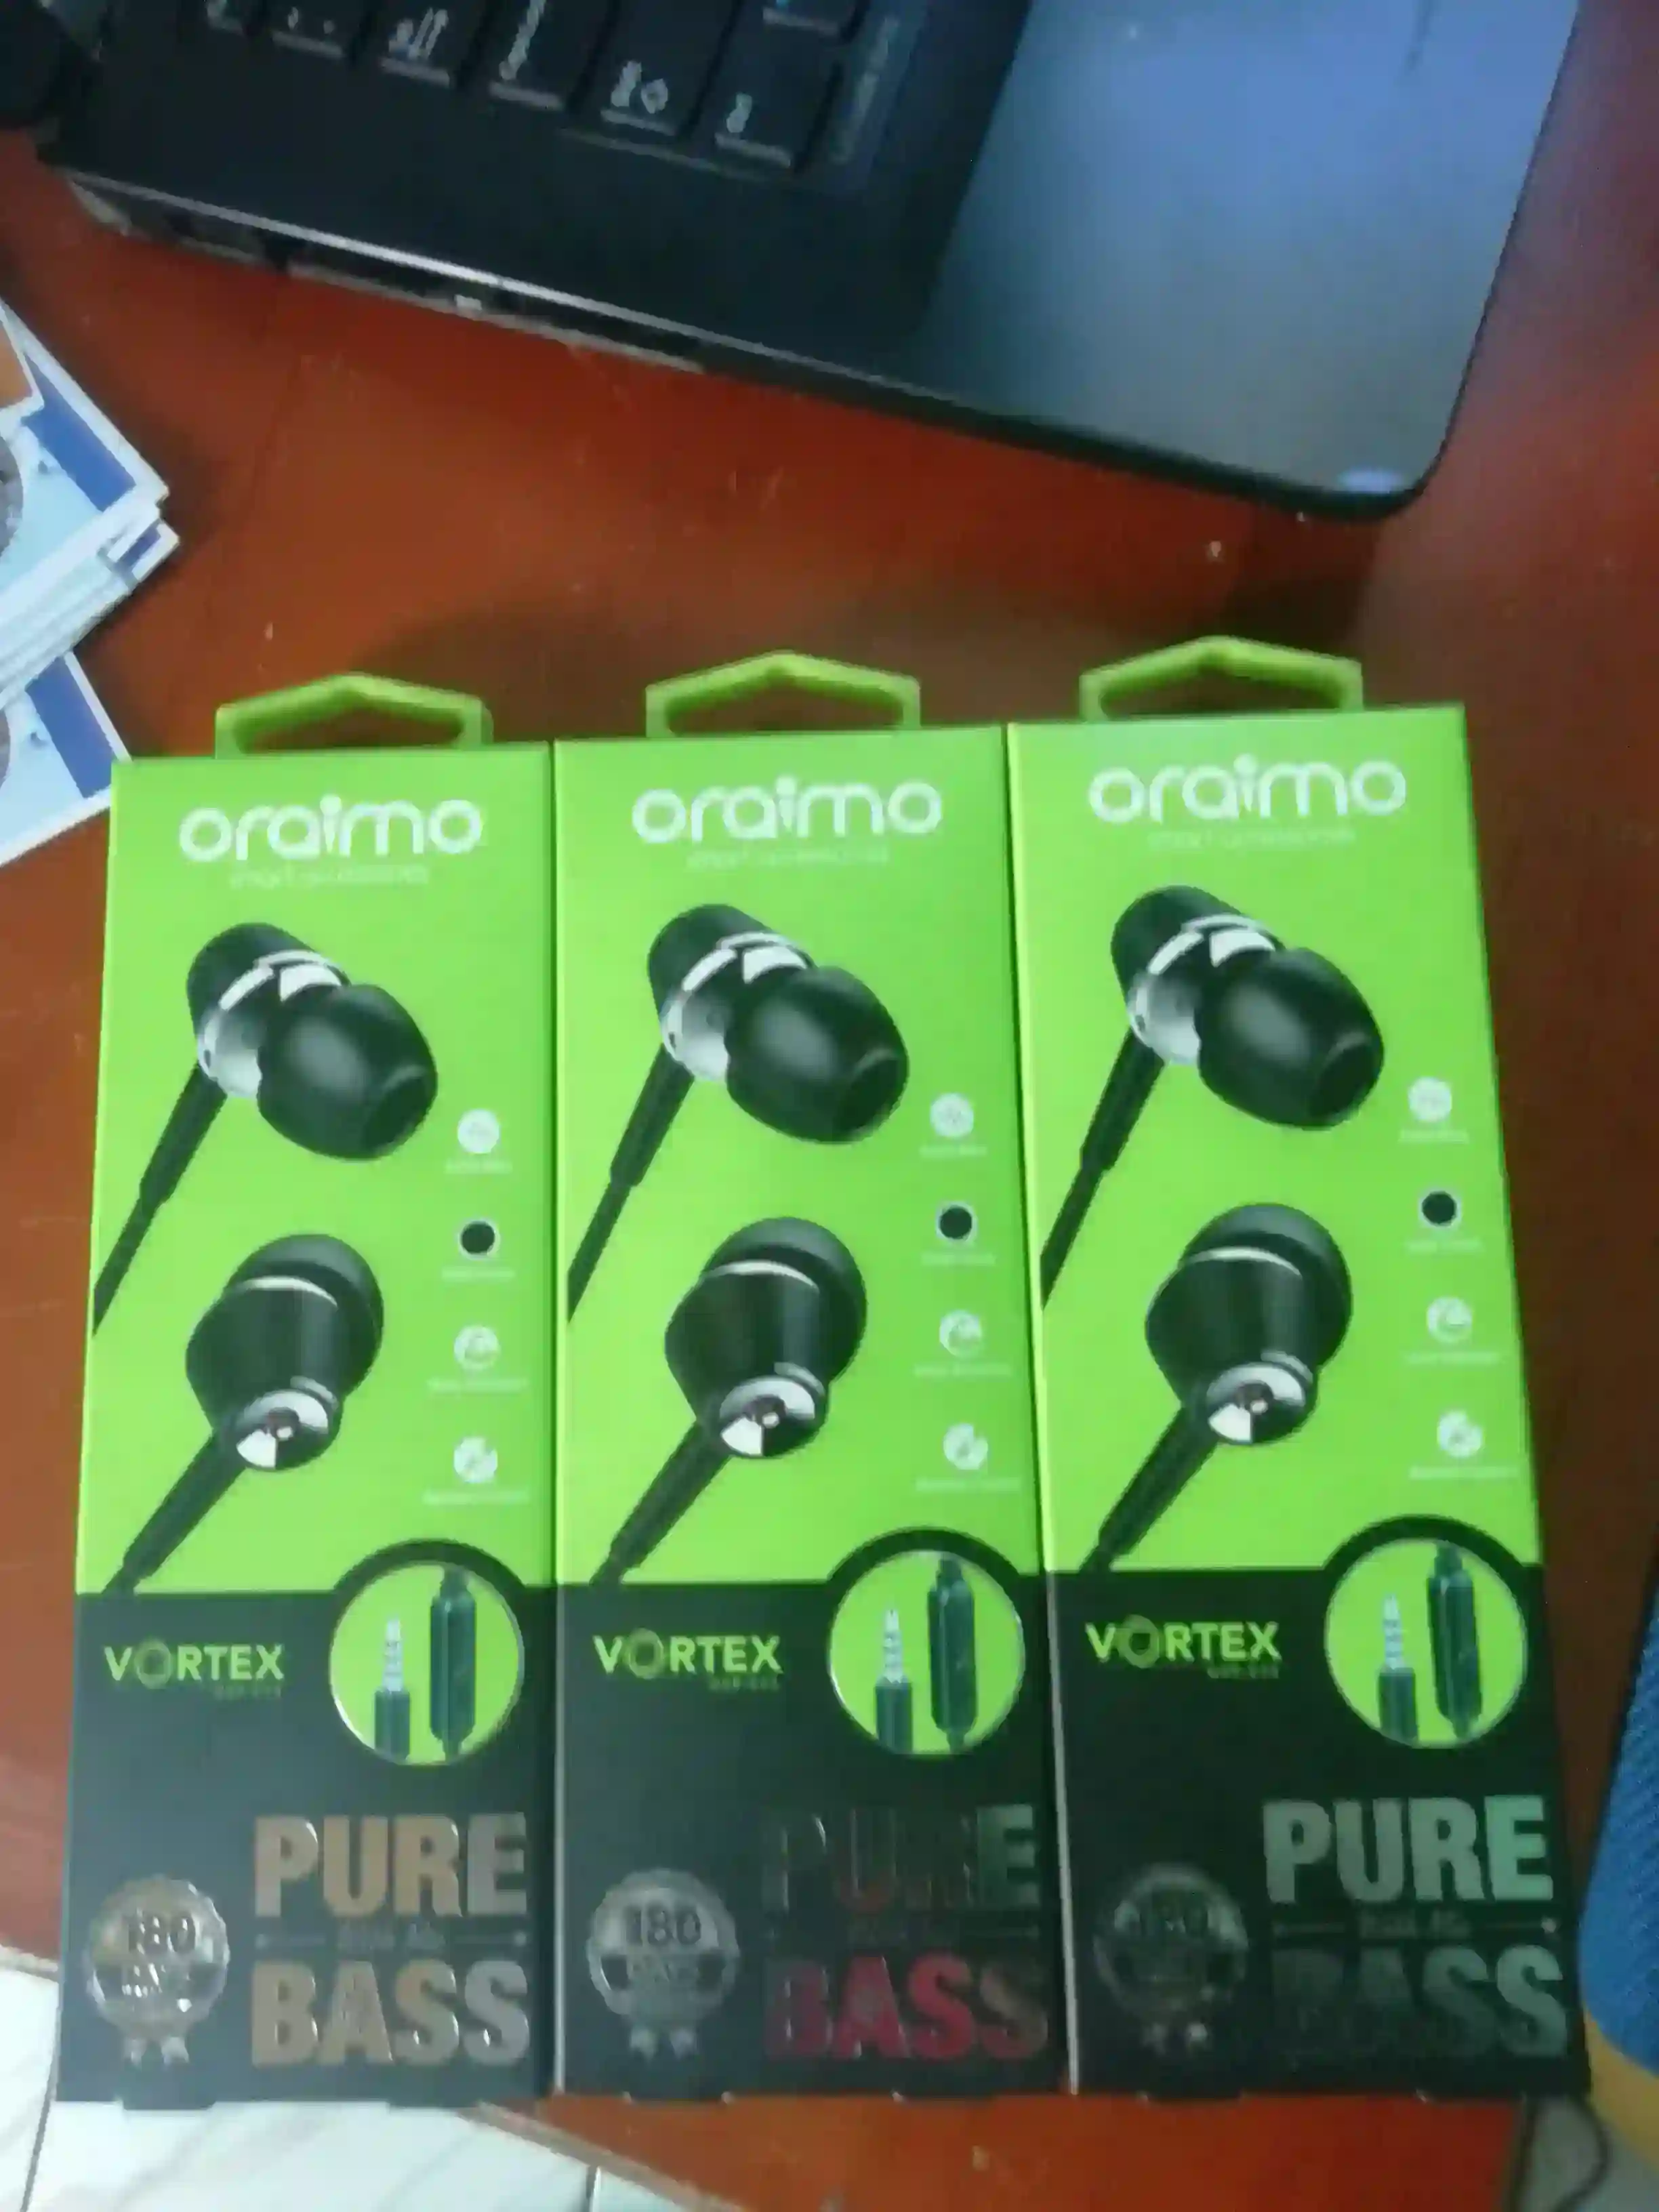 Vortex 2 oraimo ear phones for sale in zimbabwe